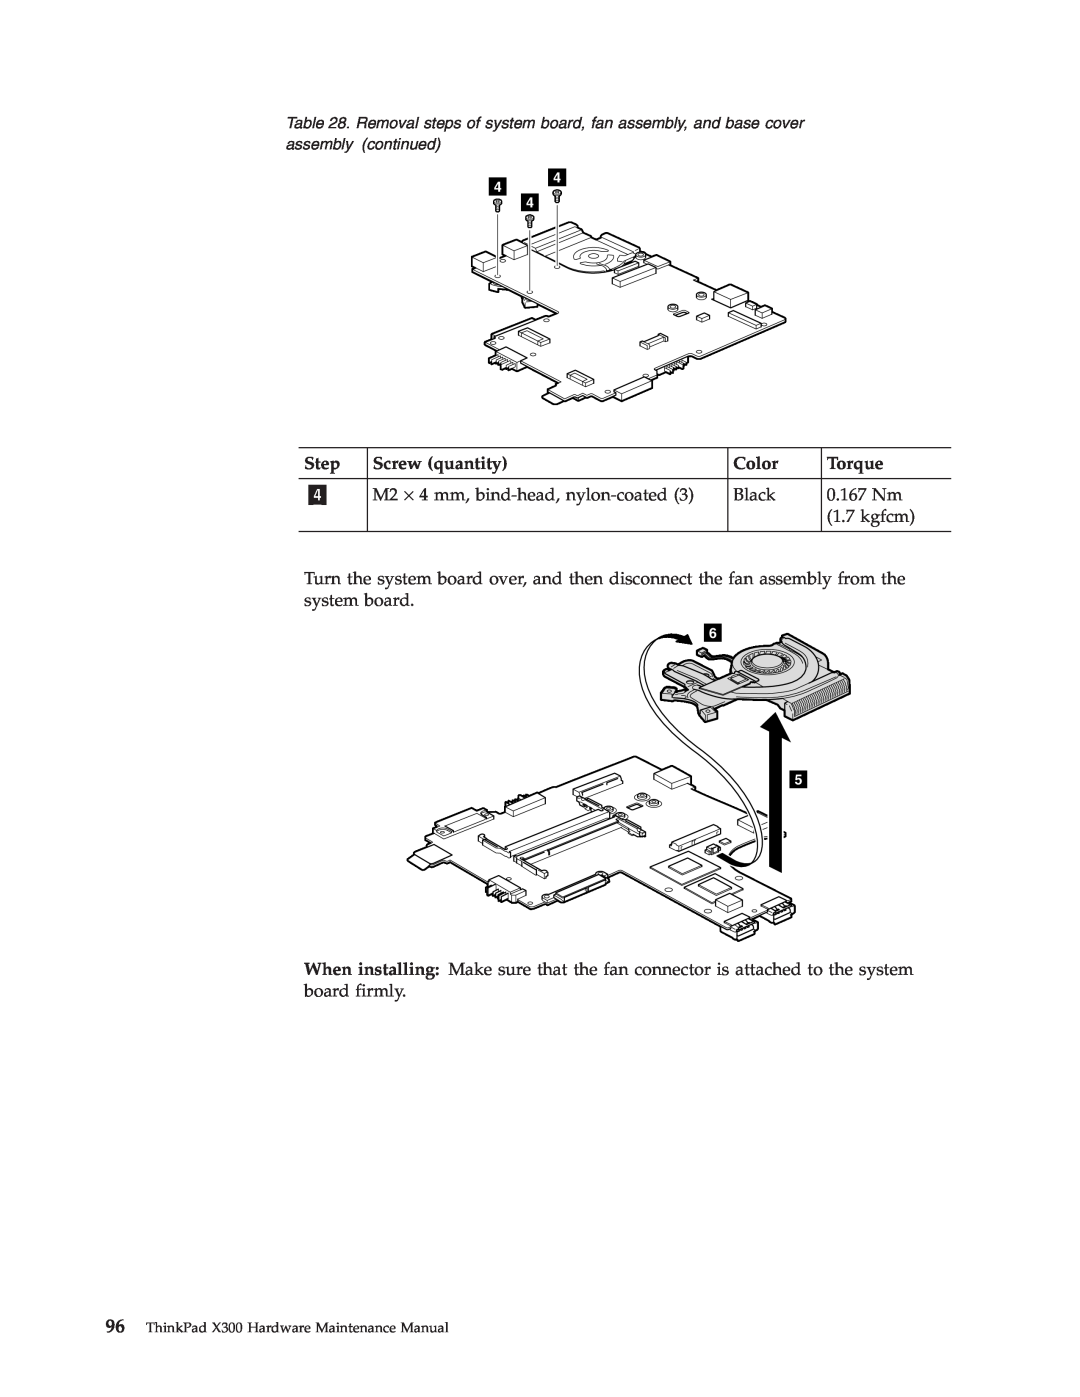 Lenovo manual Step, Screw quantity, Color, Torque, ThinkPad X300 Hardware Maintenance Manual 